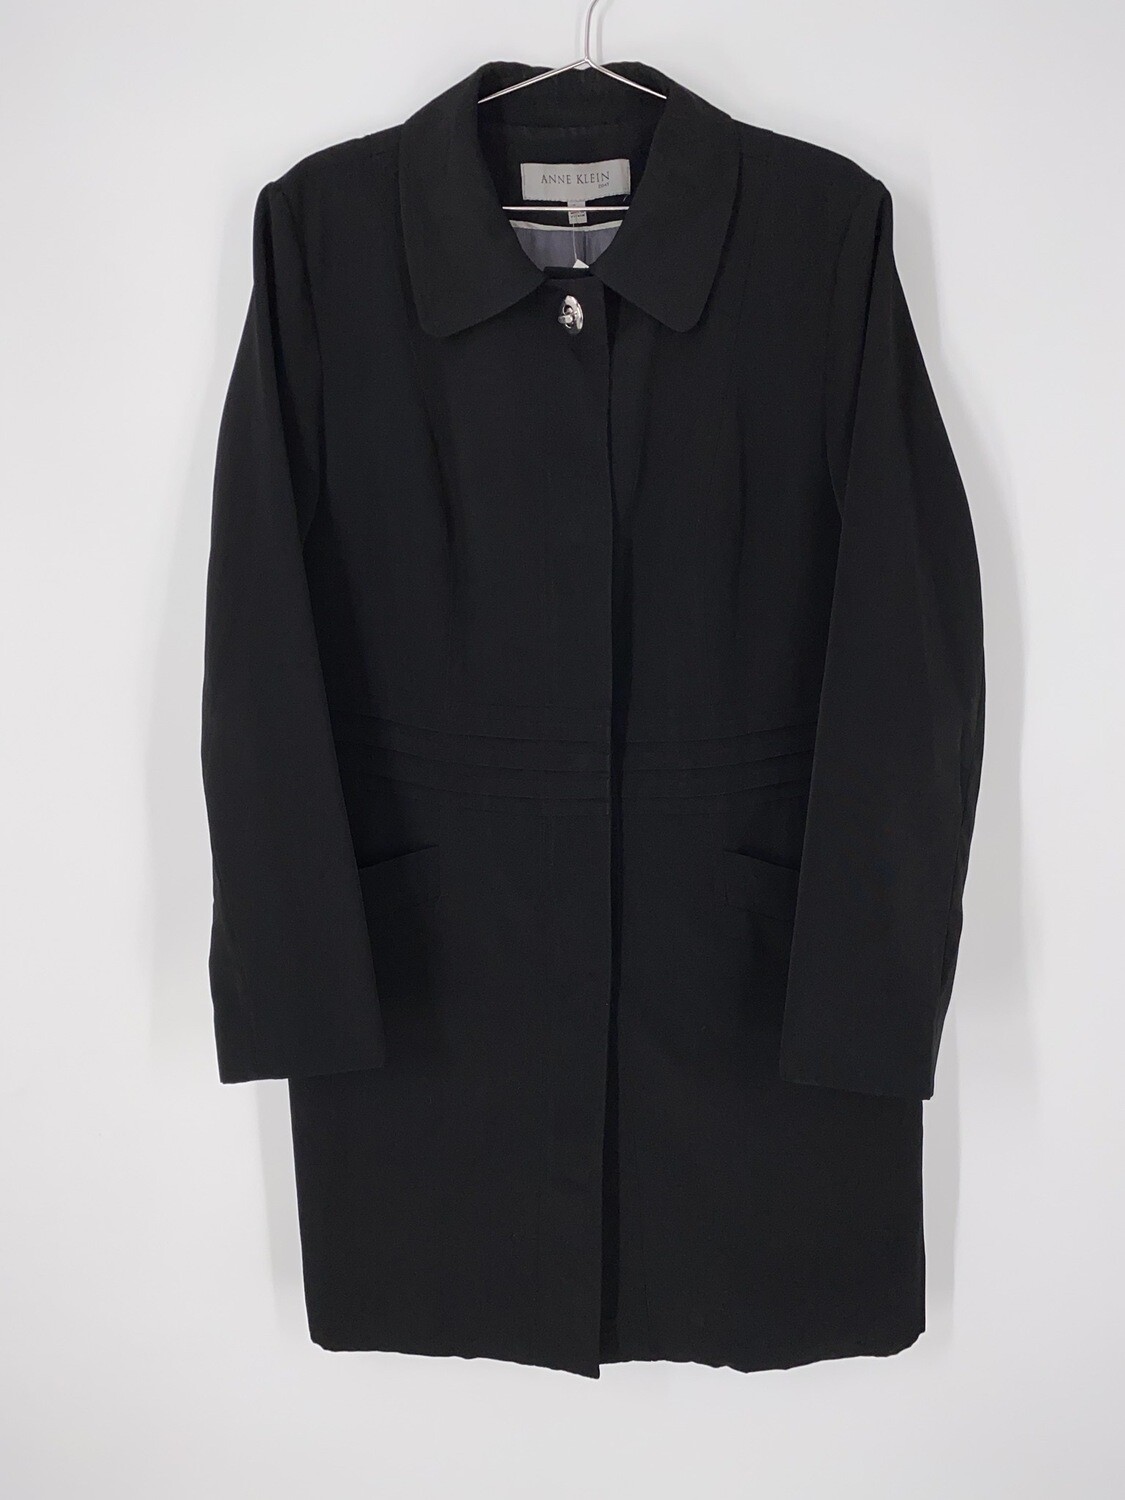 Anne Klein Black Mid Length Jacket Size M